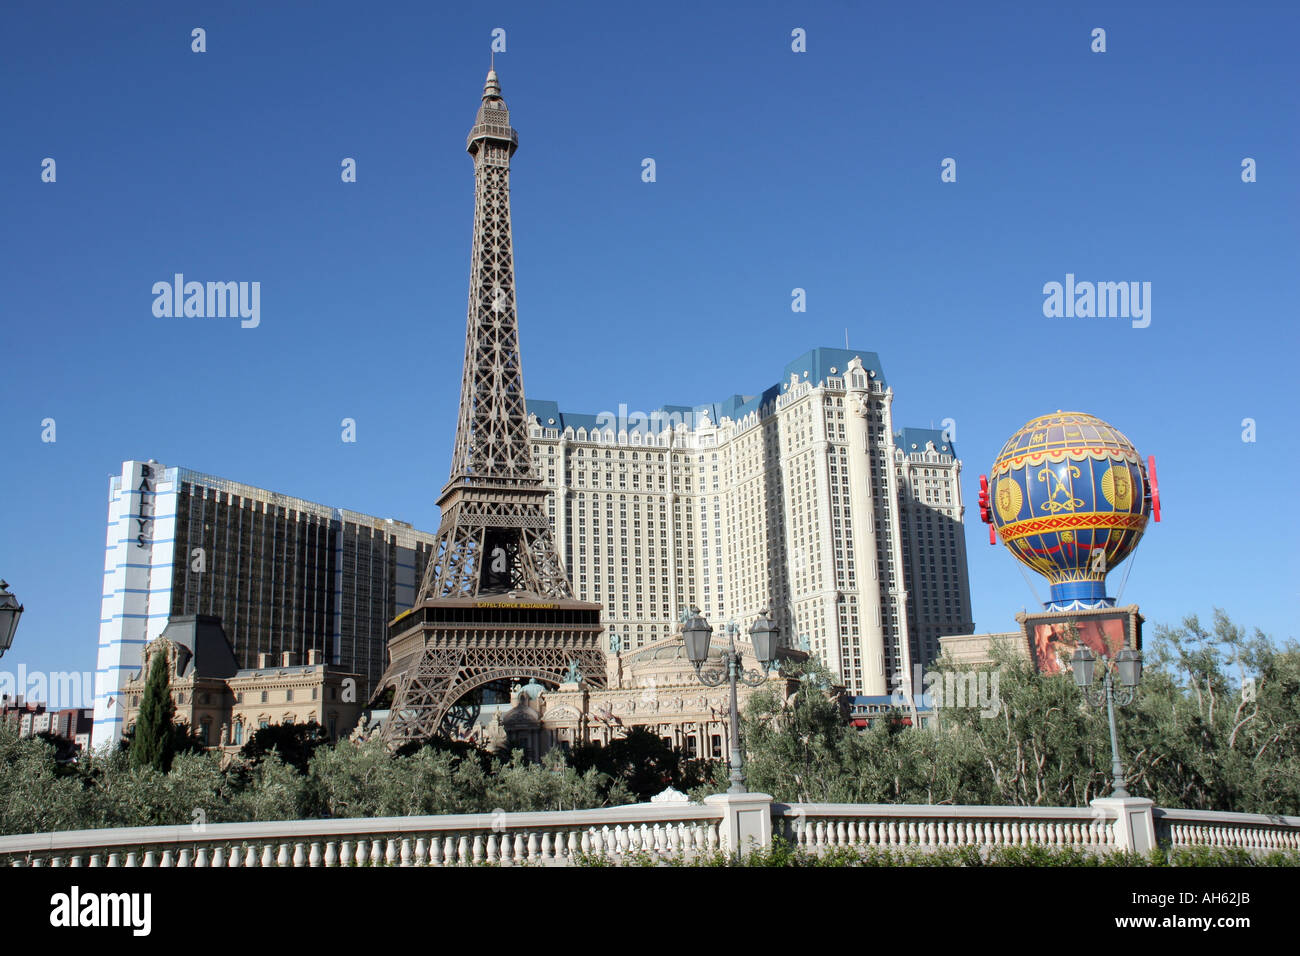 Las Vegas, Nevada - May 24, 2014 - Aerial view of Paris, Las Vegas, a  luxury resort and casino on Las Vegas Strip. The hotel has Paris theme  including Eiffel Tower and